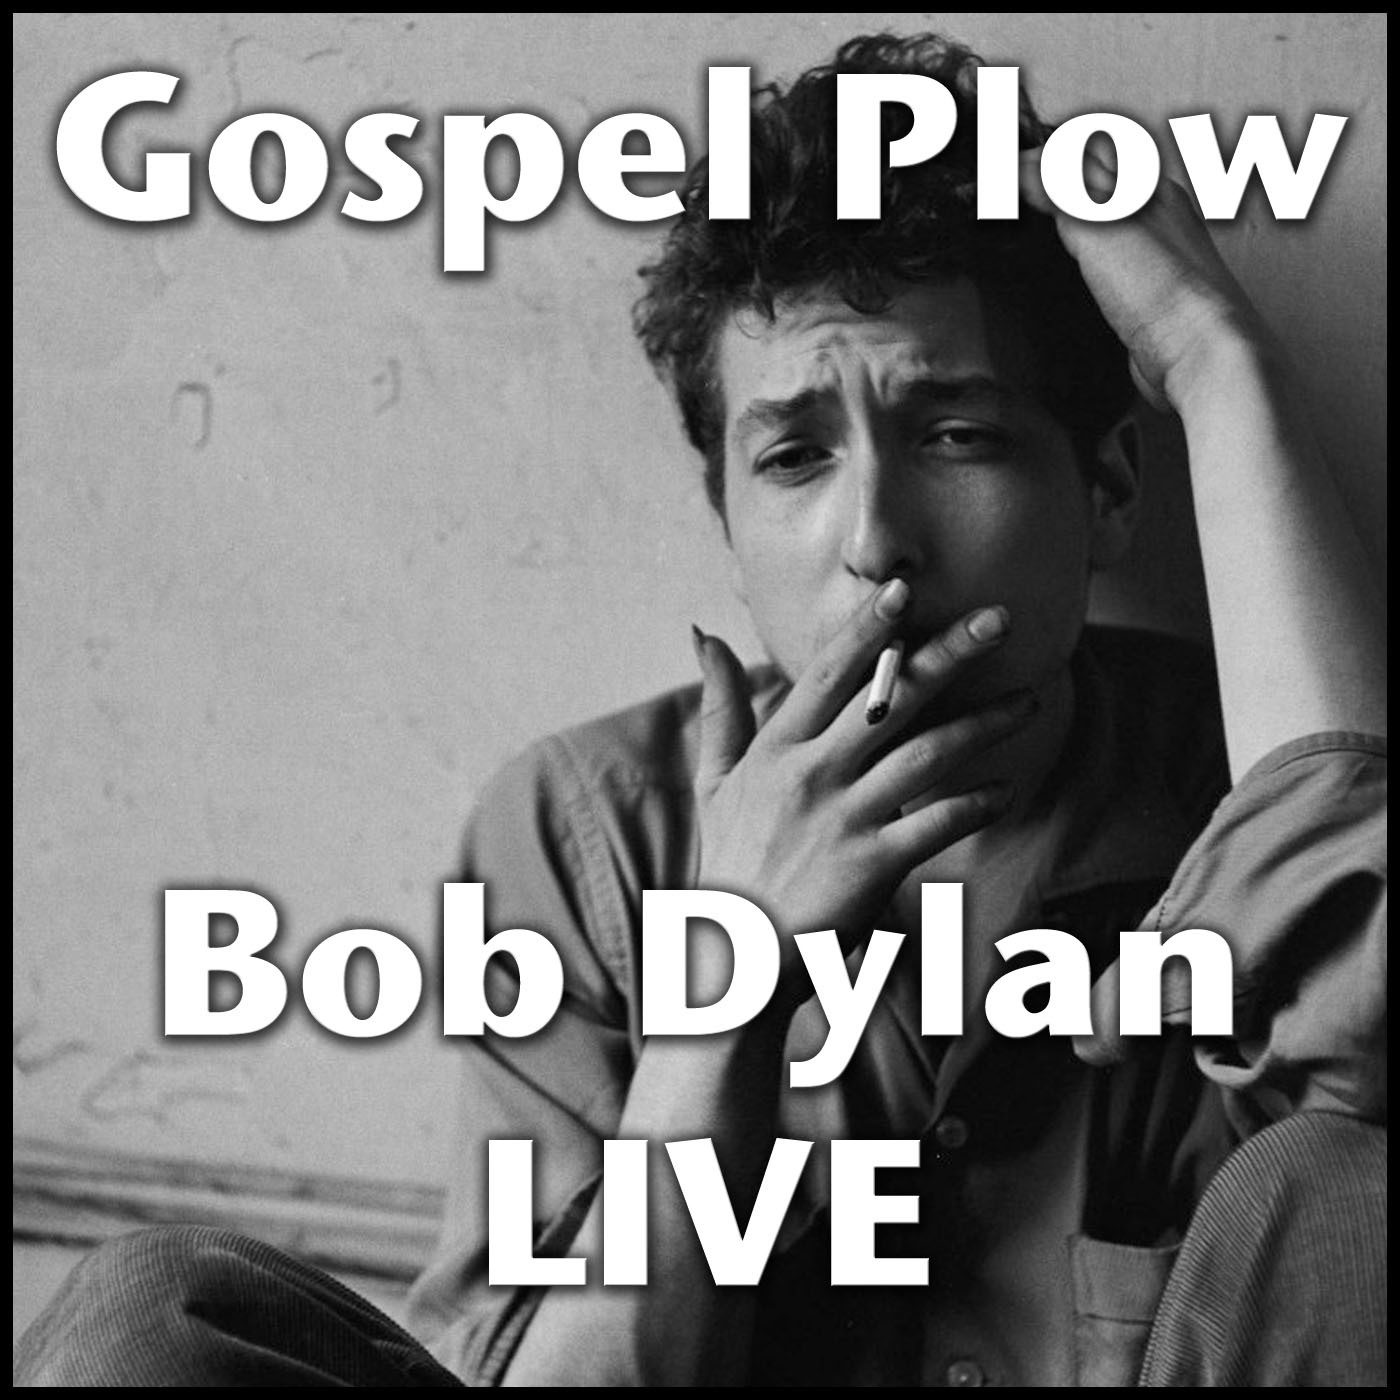 Gospel Plow (Hold On) (Live)